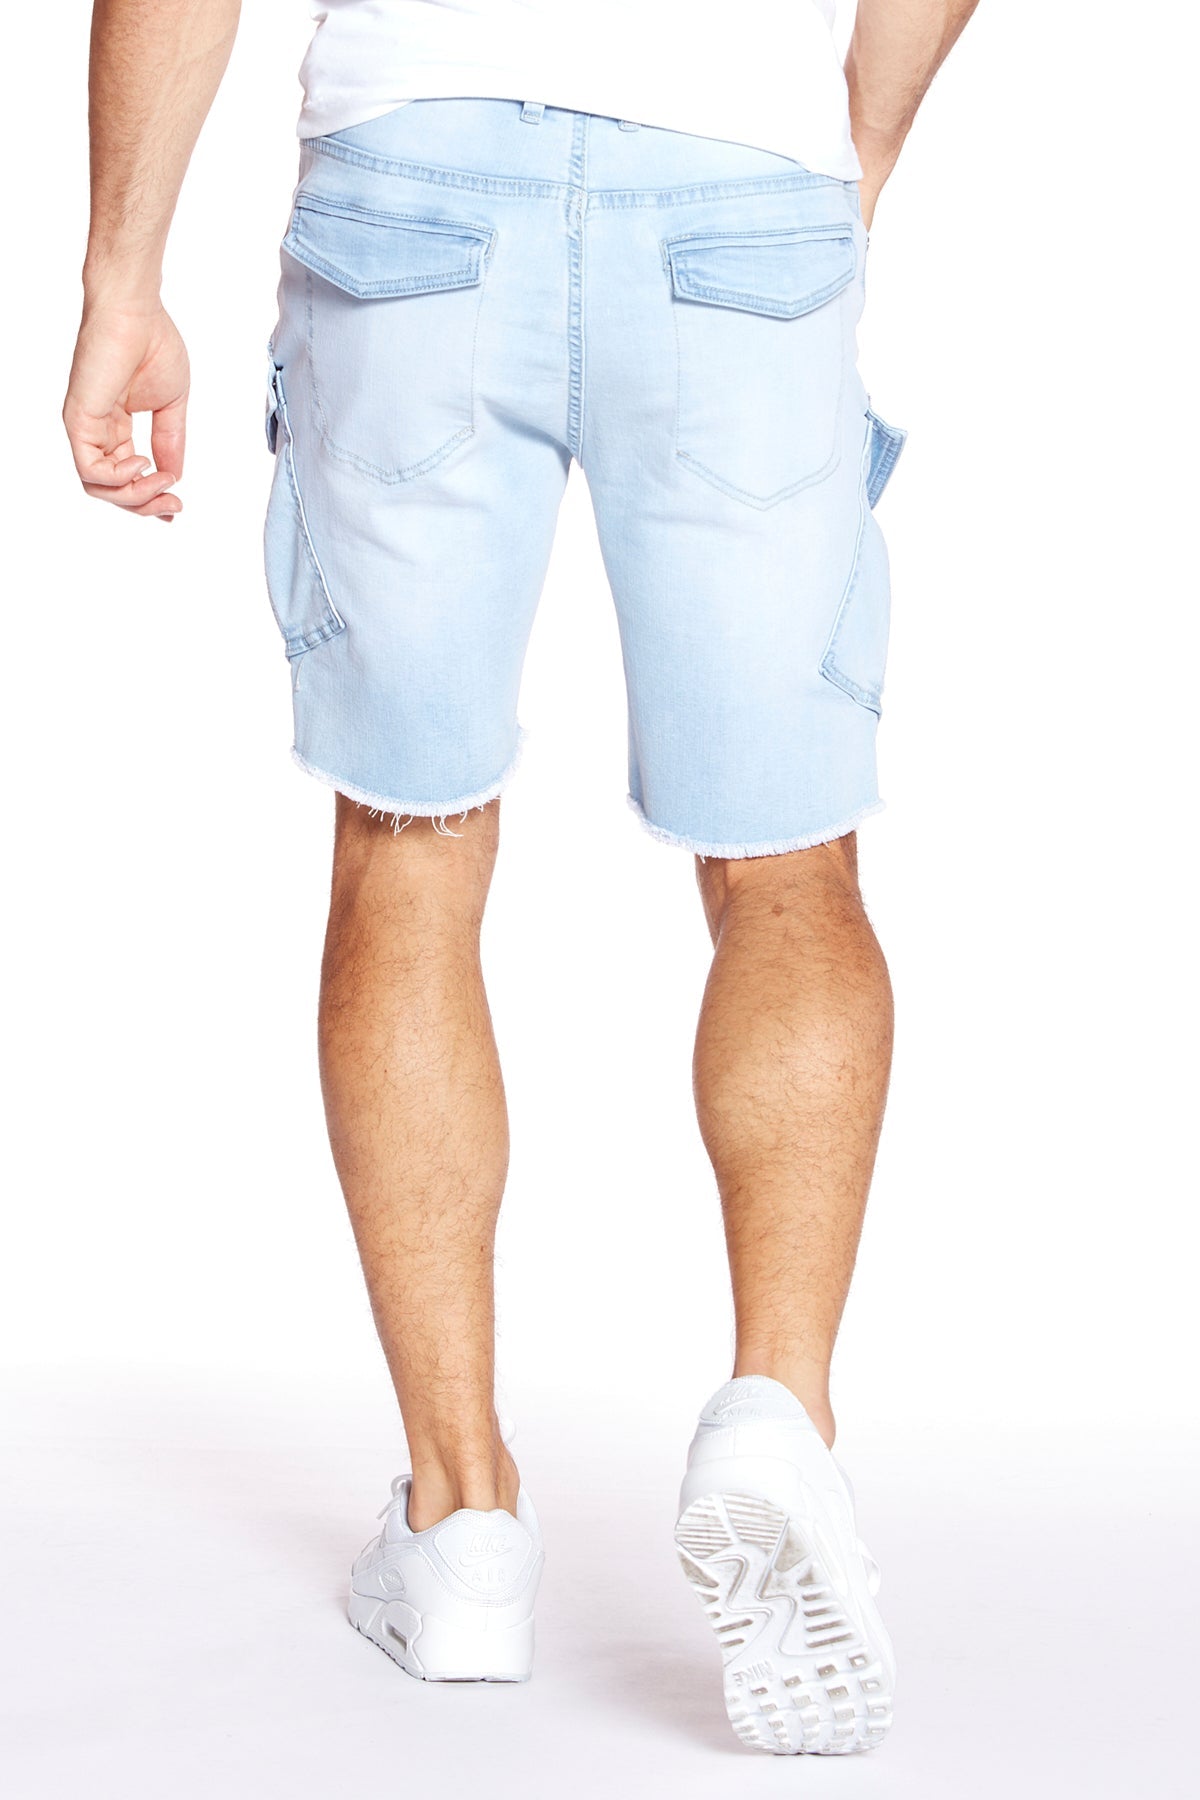 KRAVITZ - Mens Shorts With Bellowed Cargo pockets - Blue Bleach - DENIM SOCIETY™